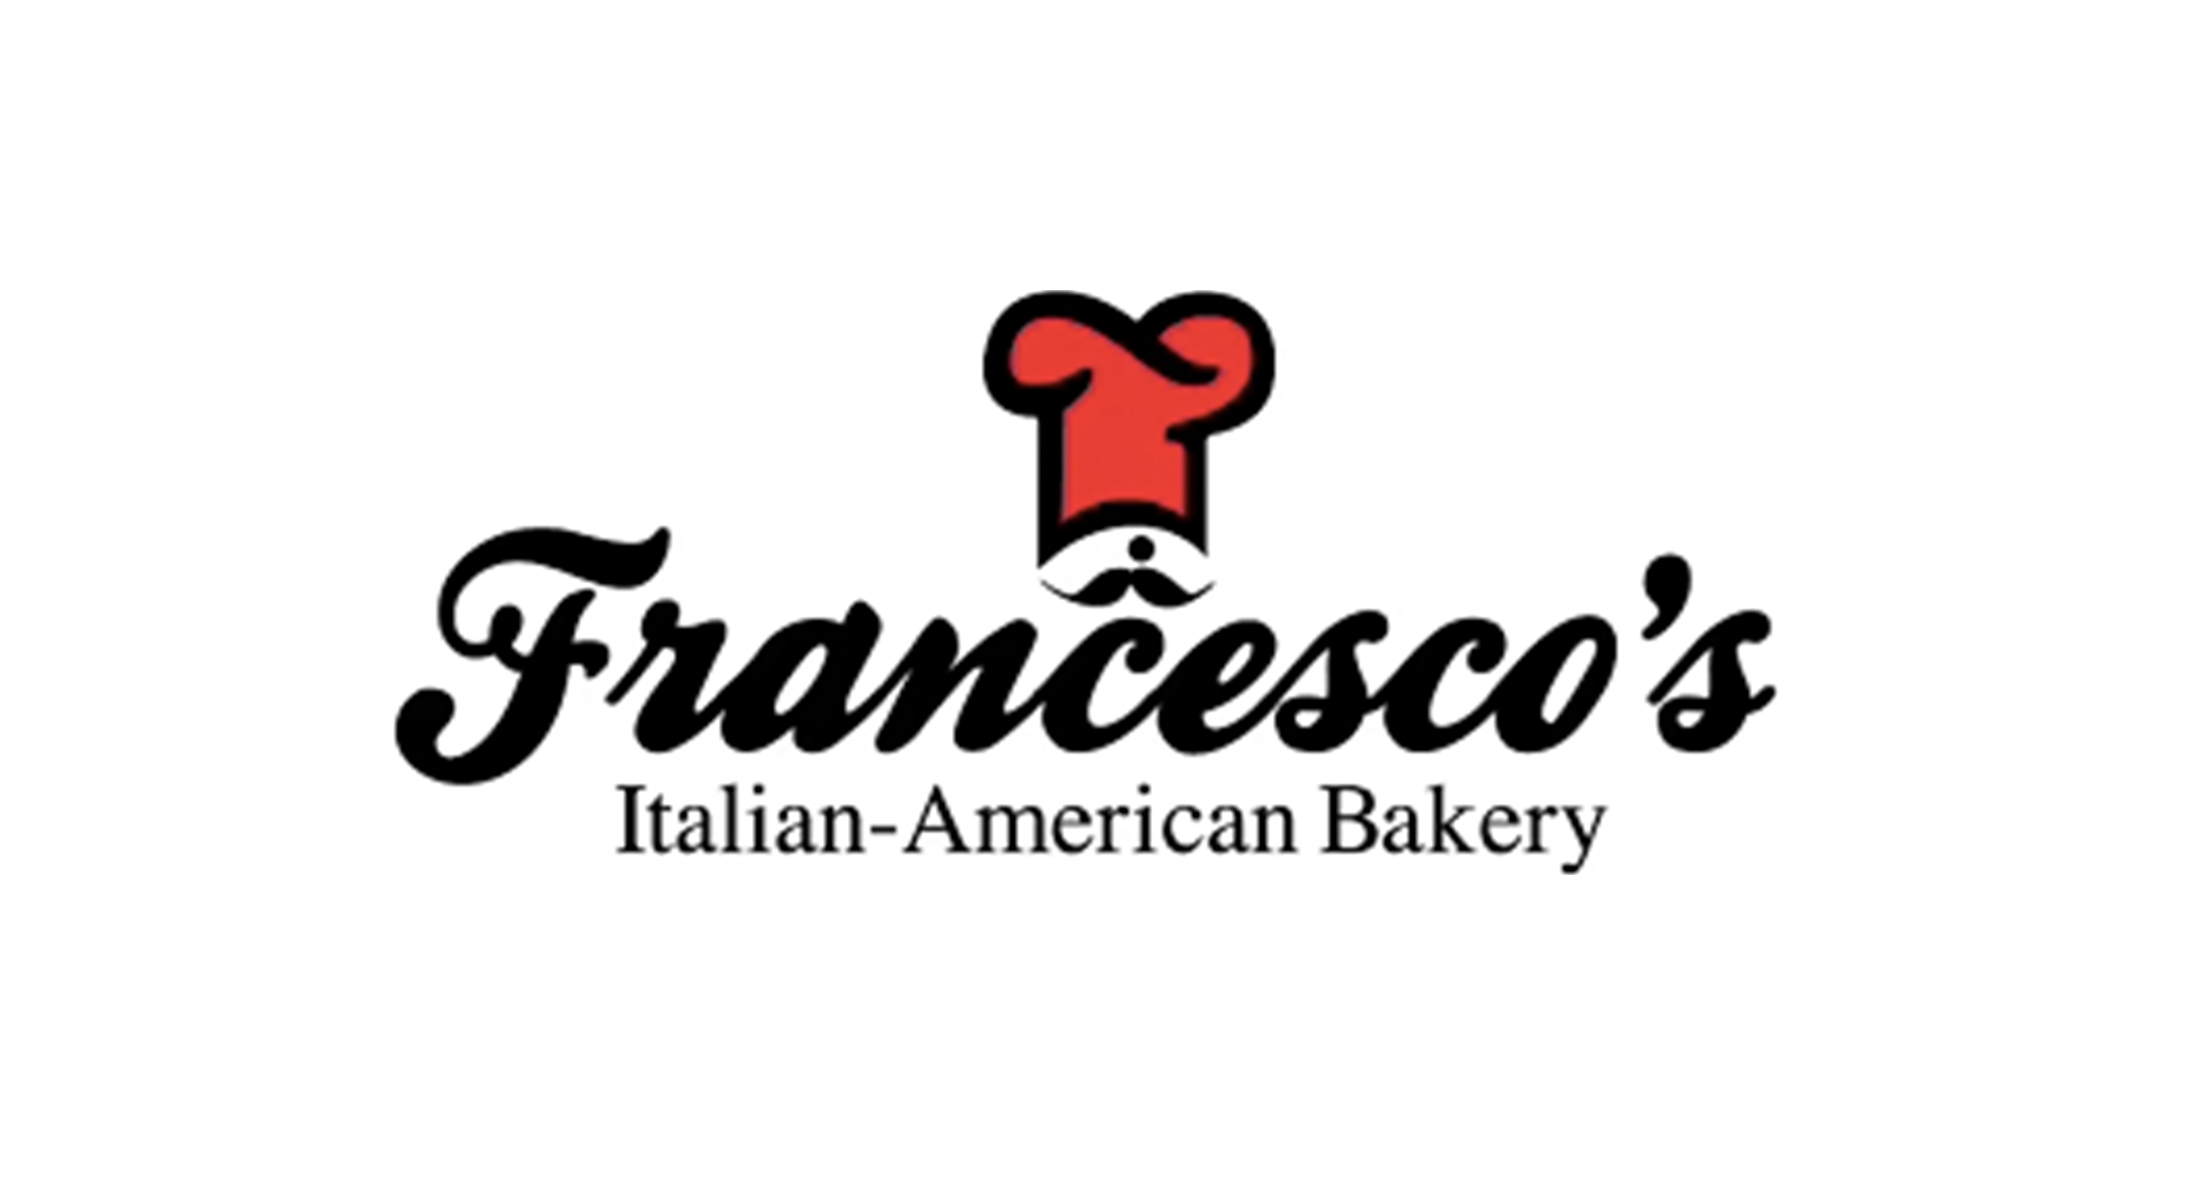 Francesco's Italian-American Bakery